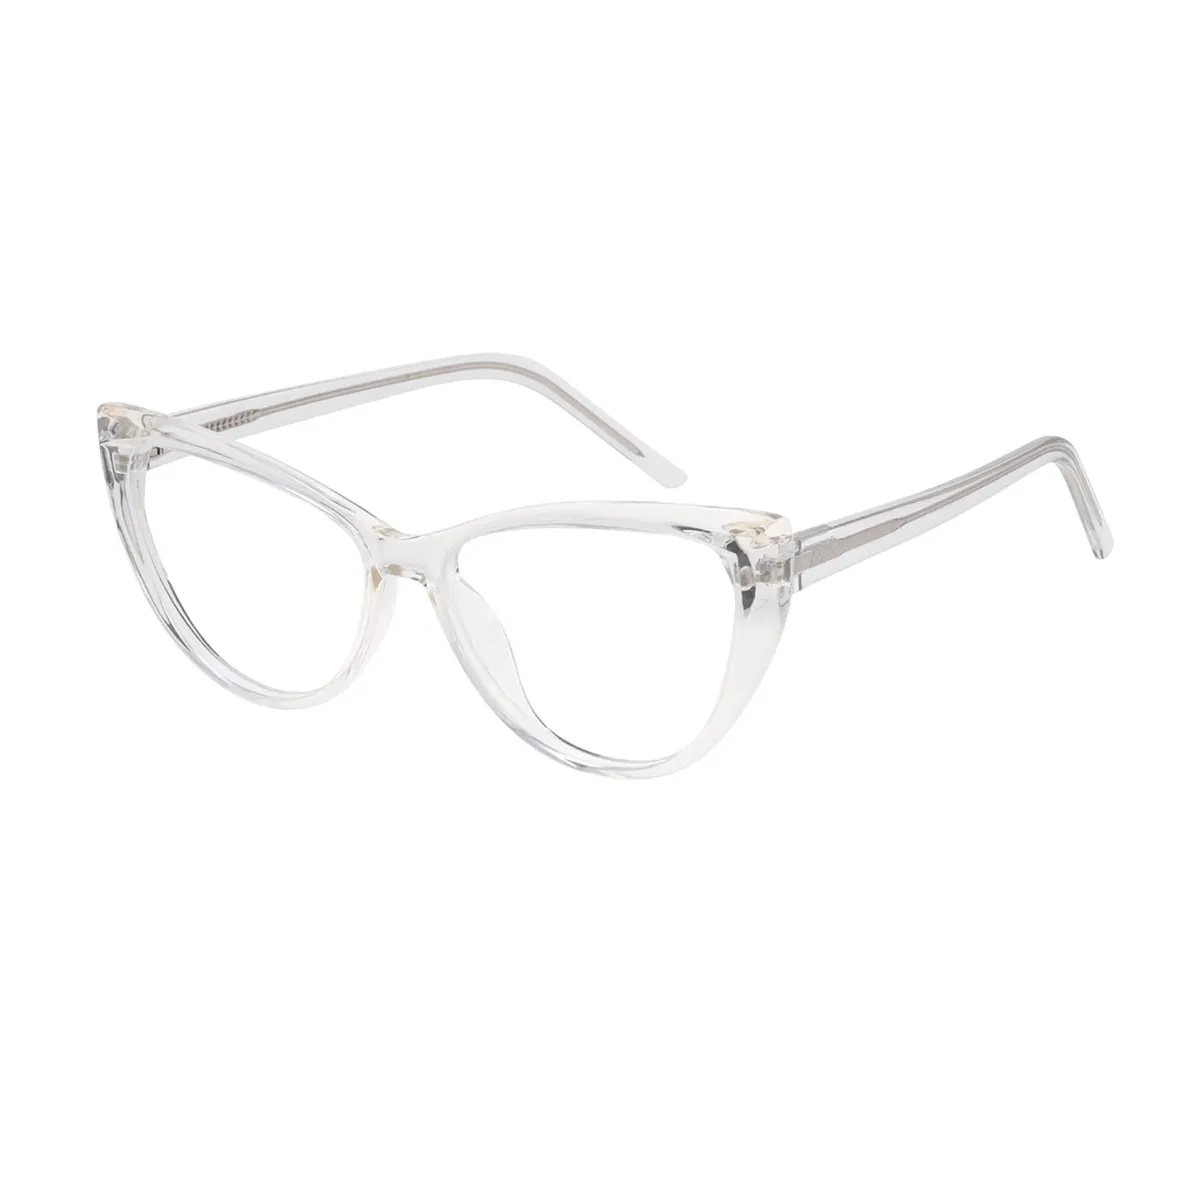 Ayer - Cat-eye Translucent Glasses for Women - EFE